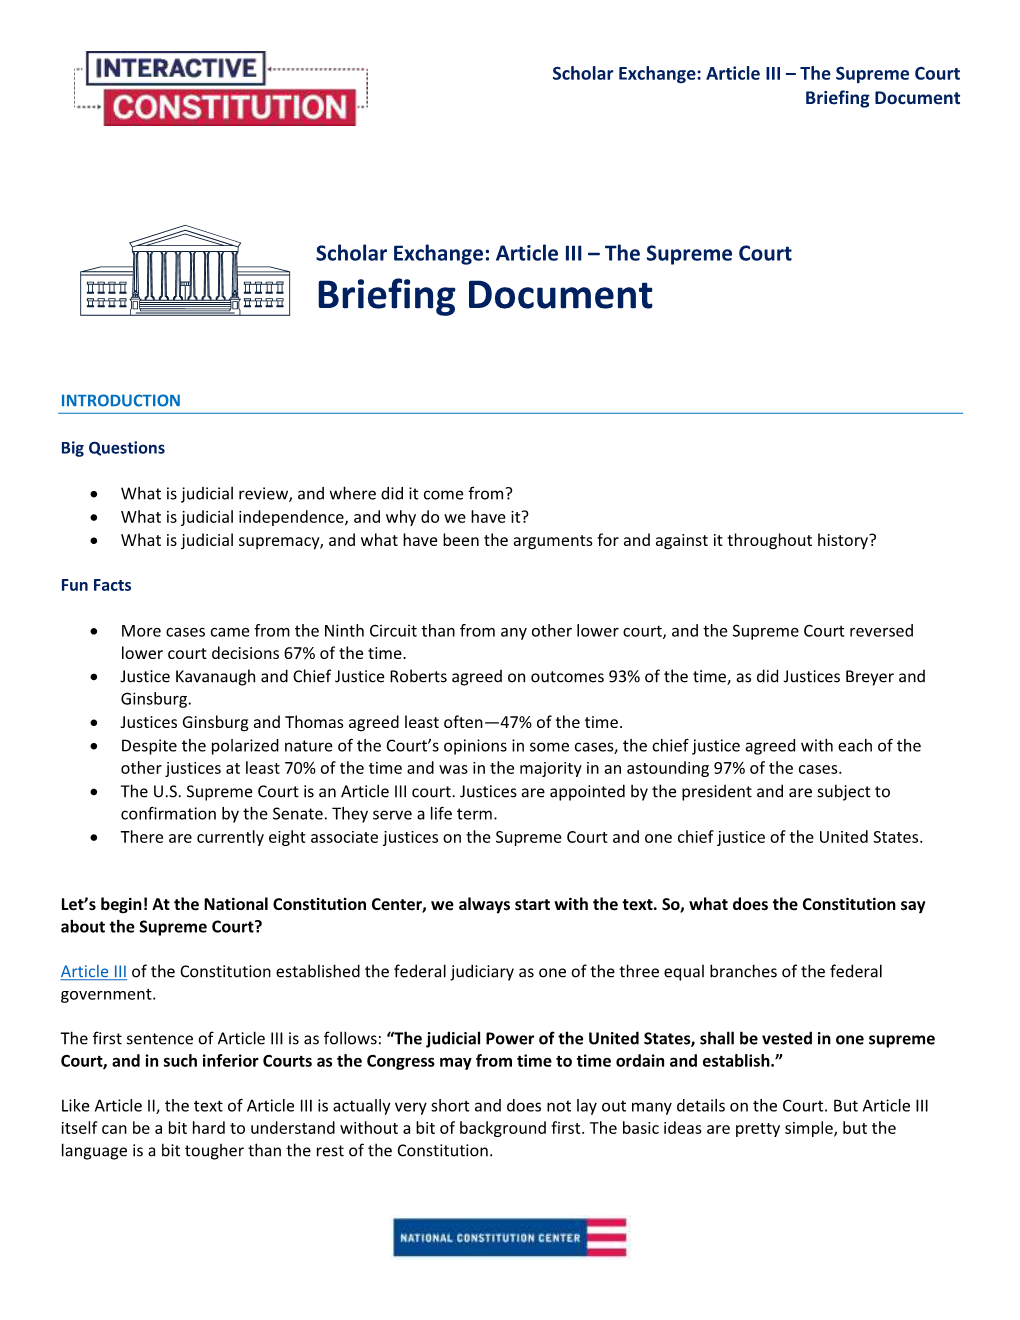 Briefing Document